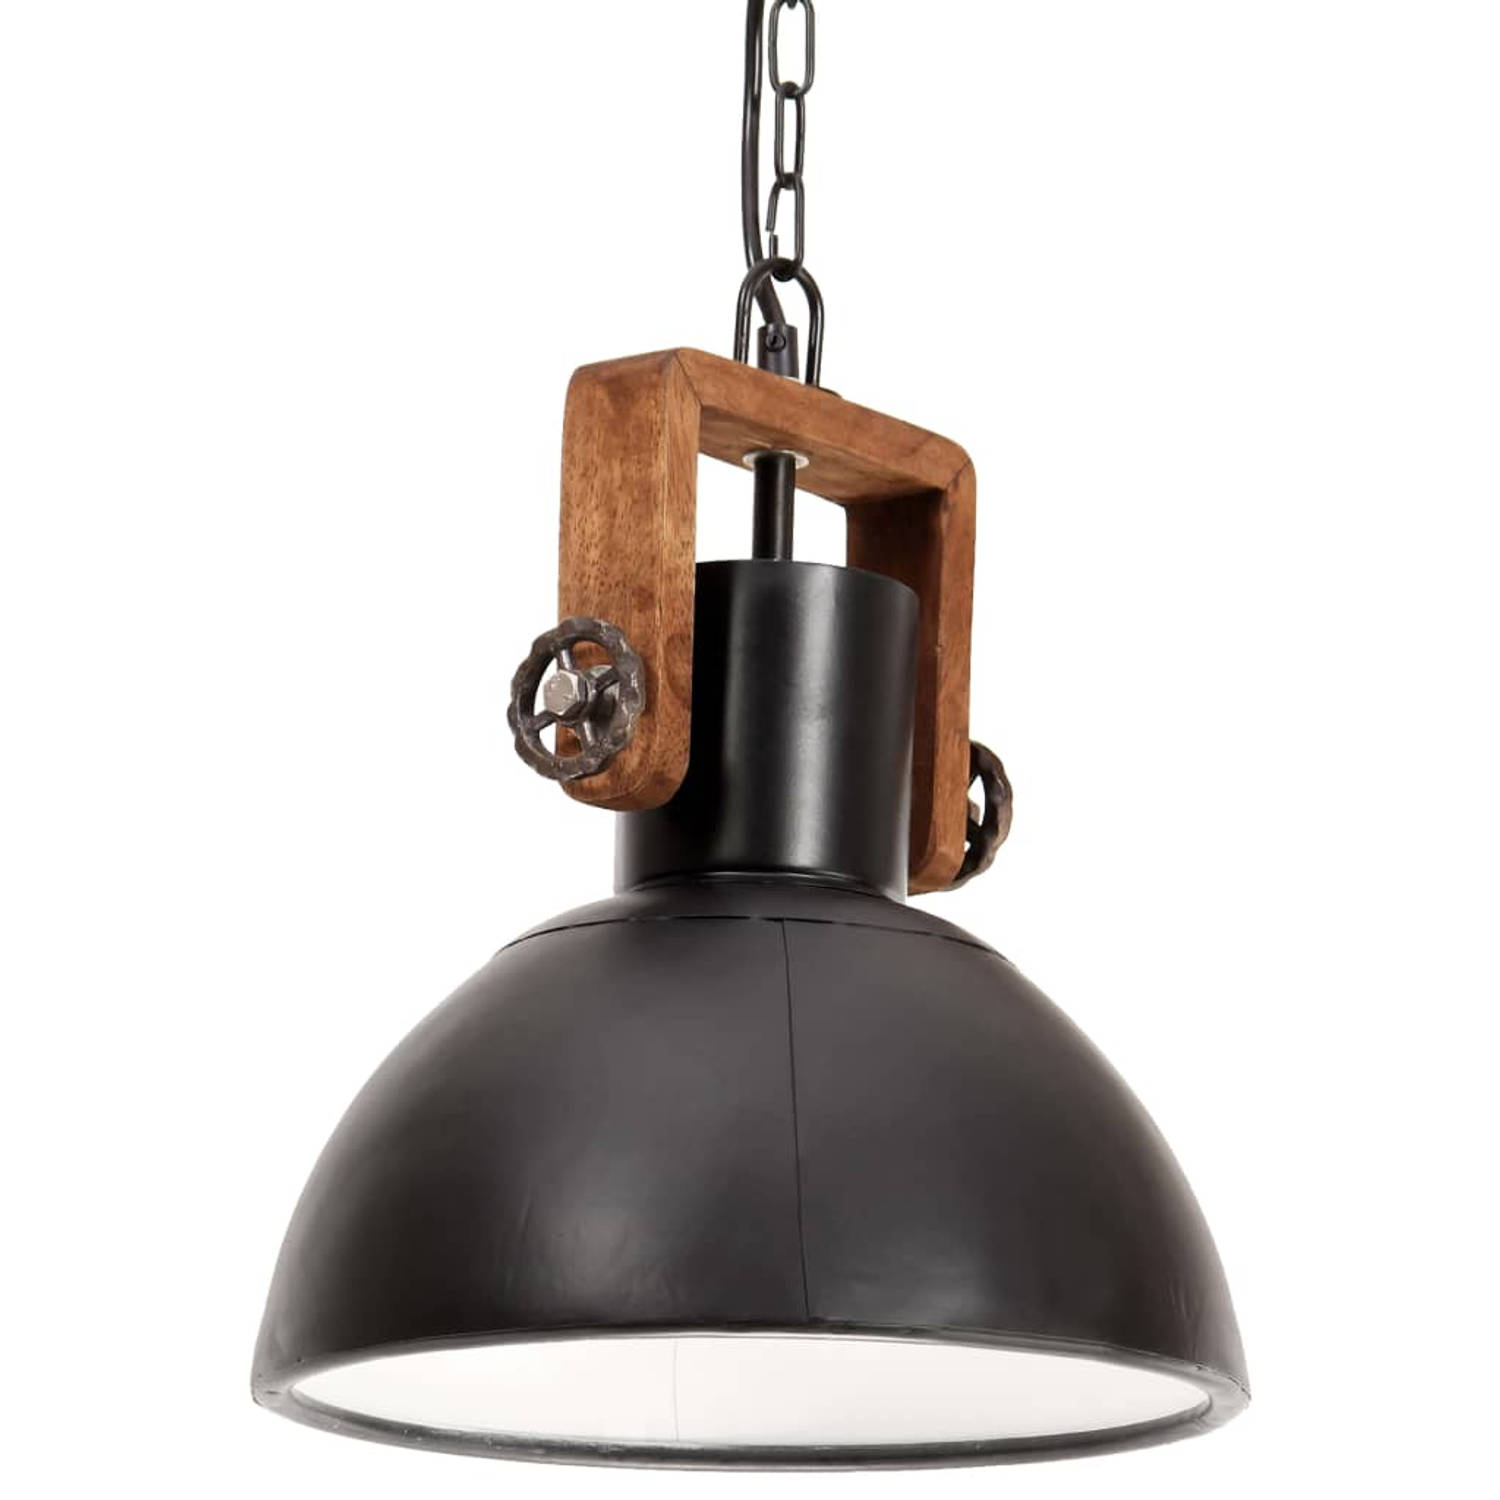 The Living Store Hanglamp Industriële Stijl - 30x37 cm - Zwart/Bruin - E27 Fitting - Max - 25W